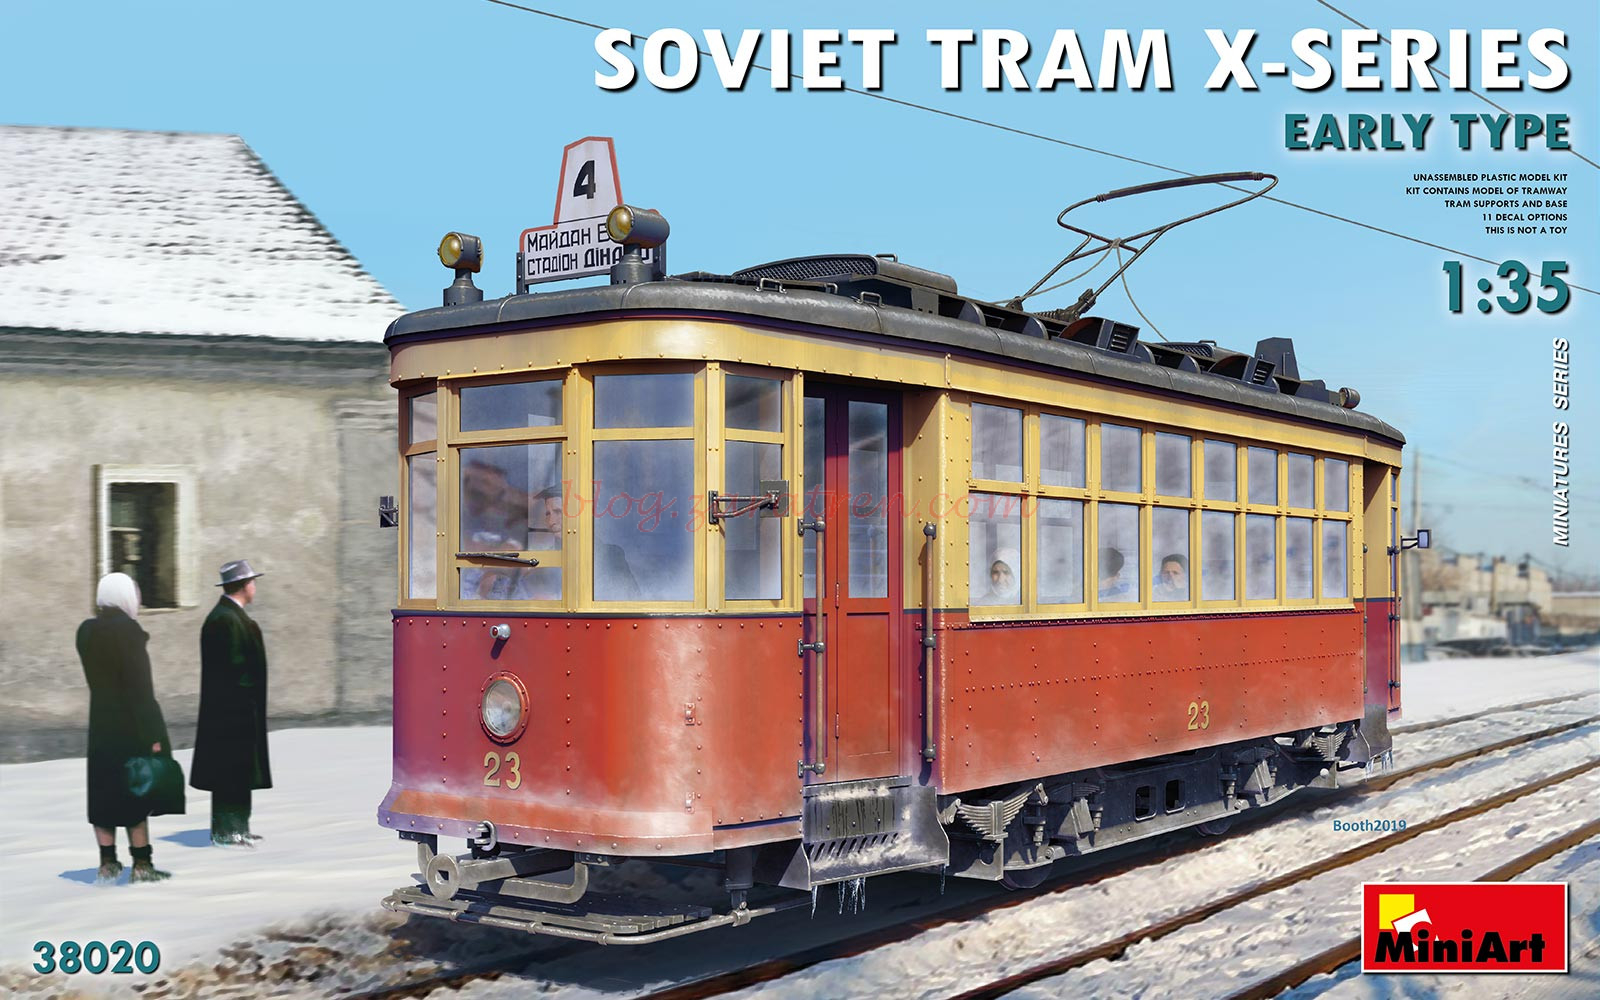 Miniart Models – Tranvia Sovietico Serie X, Escala 1:35, Ref. 38020.